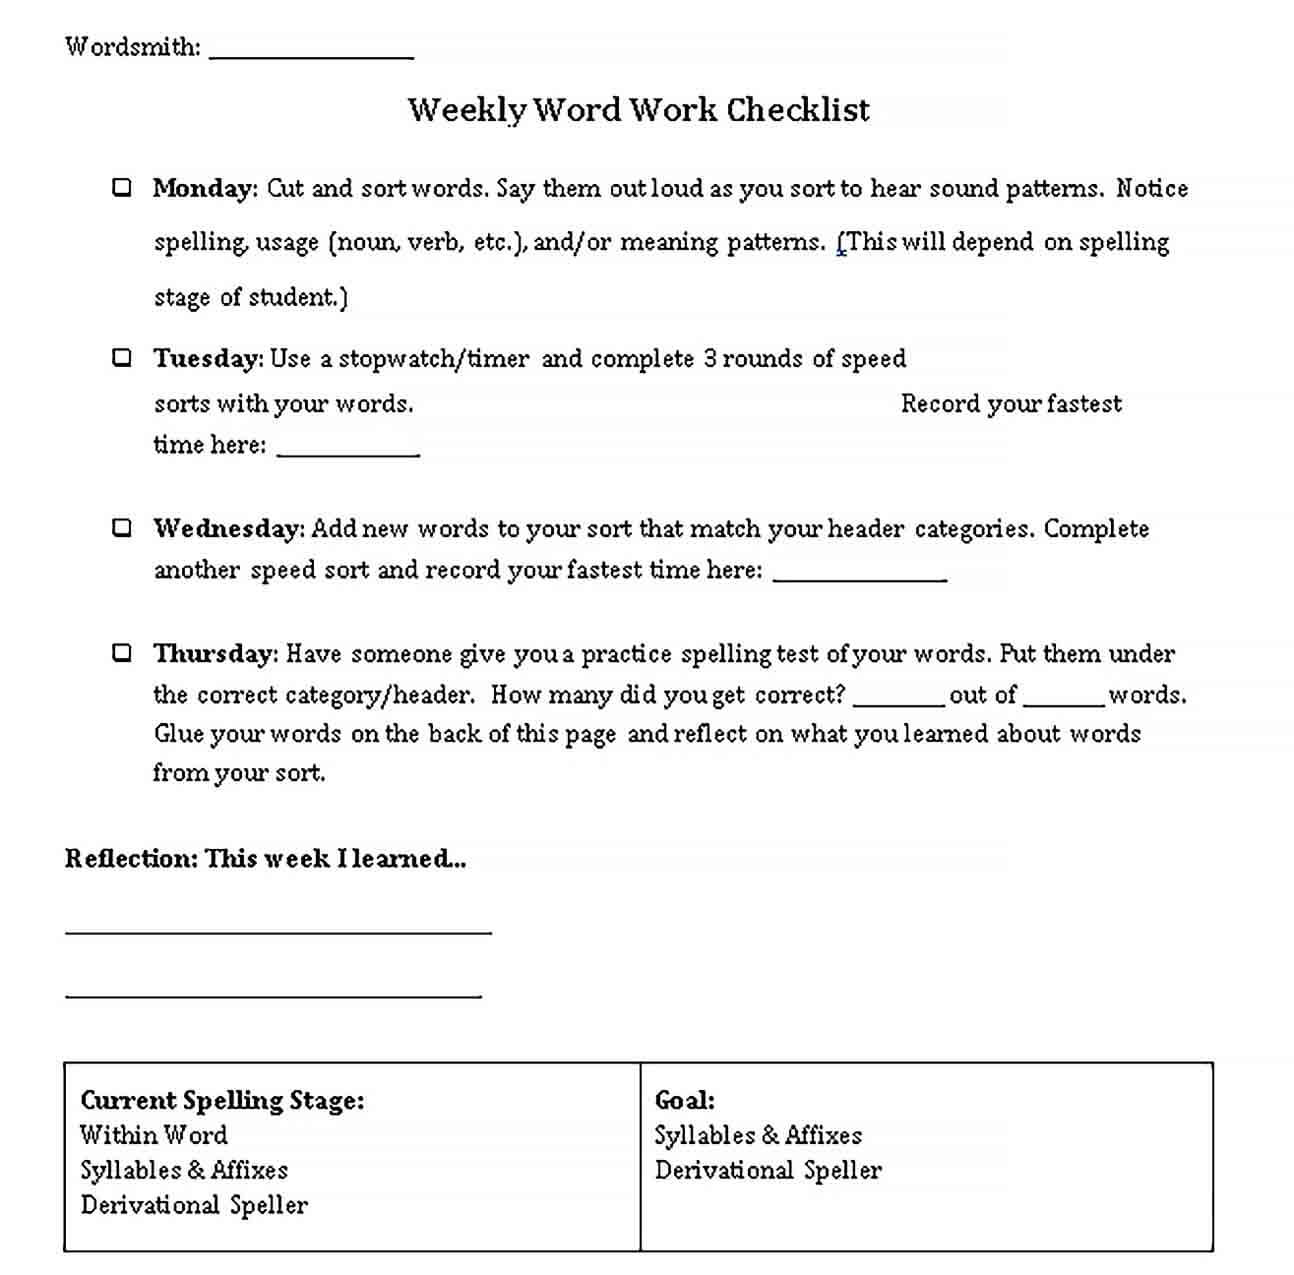 Sample Weekly Work Checklist